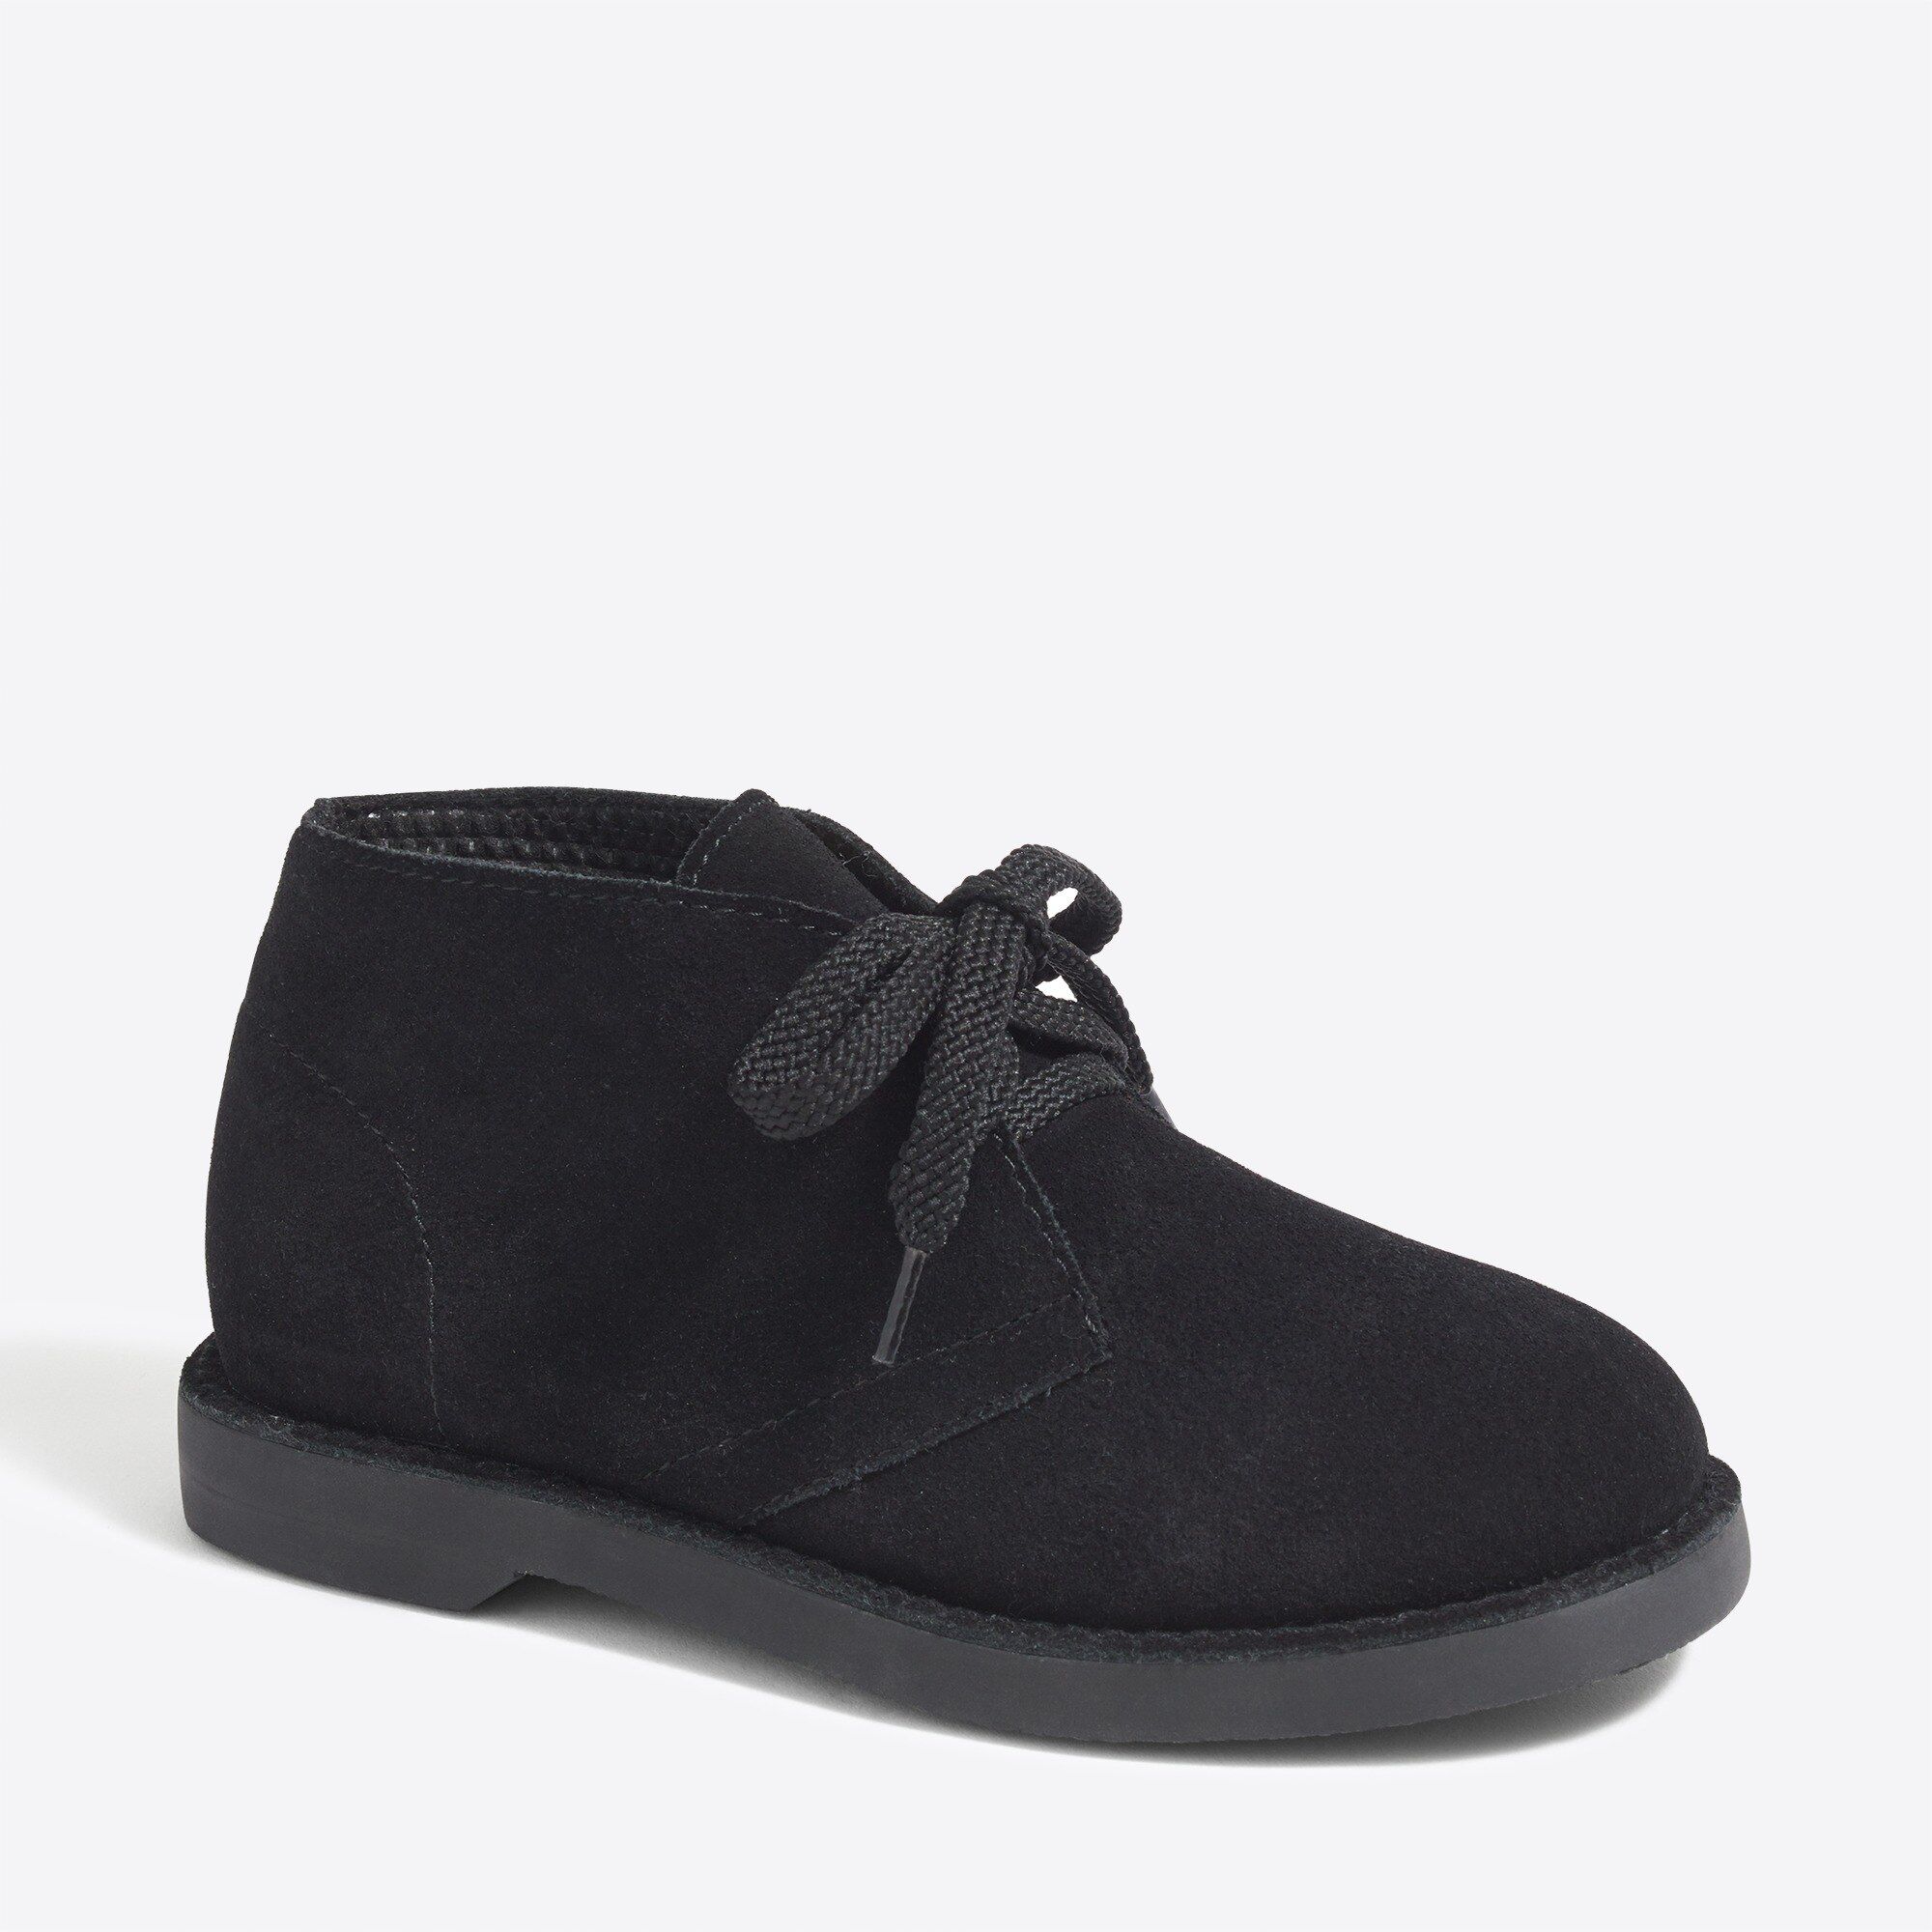 https://factory.jcrew.com/p/boys-clothing/shoes_socks/kids-calvert-boots/91860?color_name=stone | J.Crew Factory